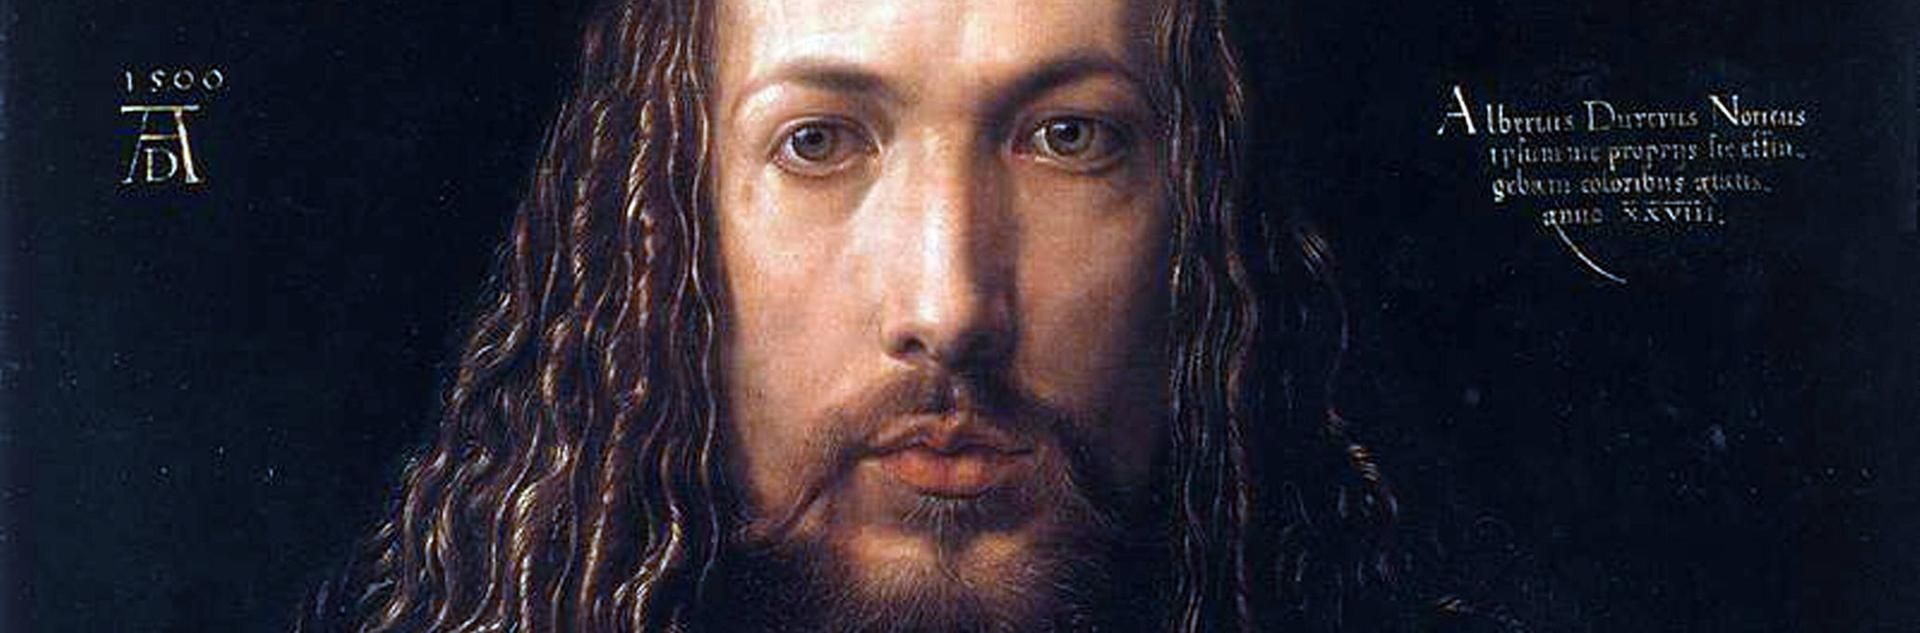 Albrecht Dürer – Der erste Selbstdarsteller der Kunst